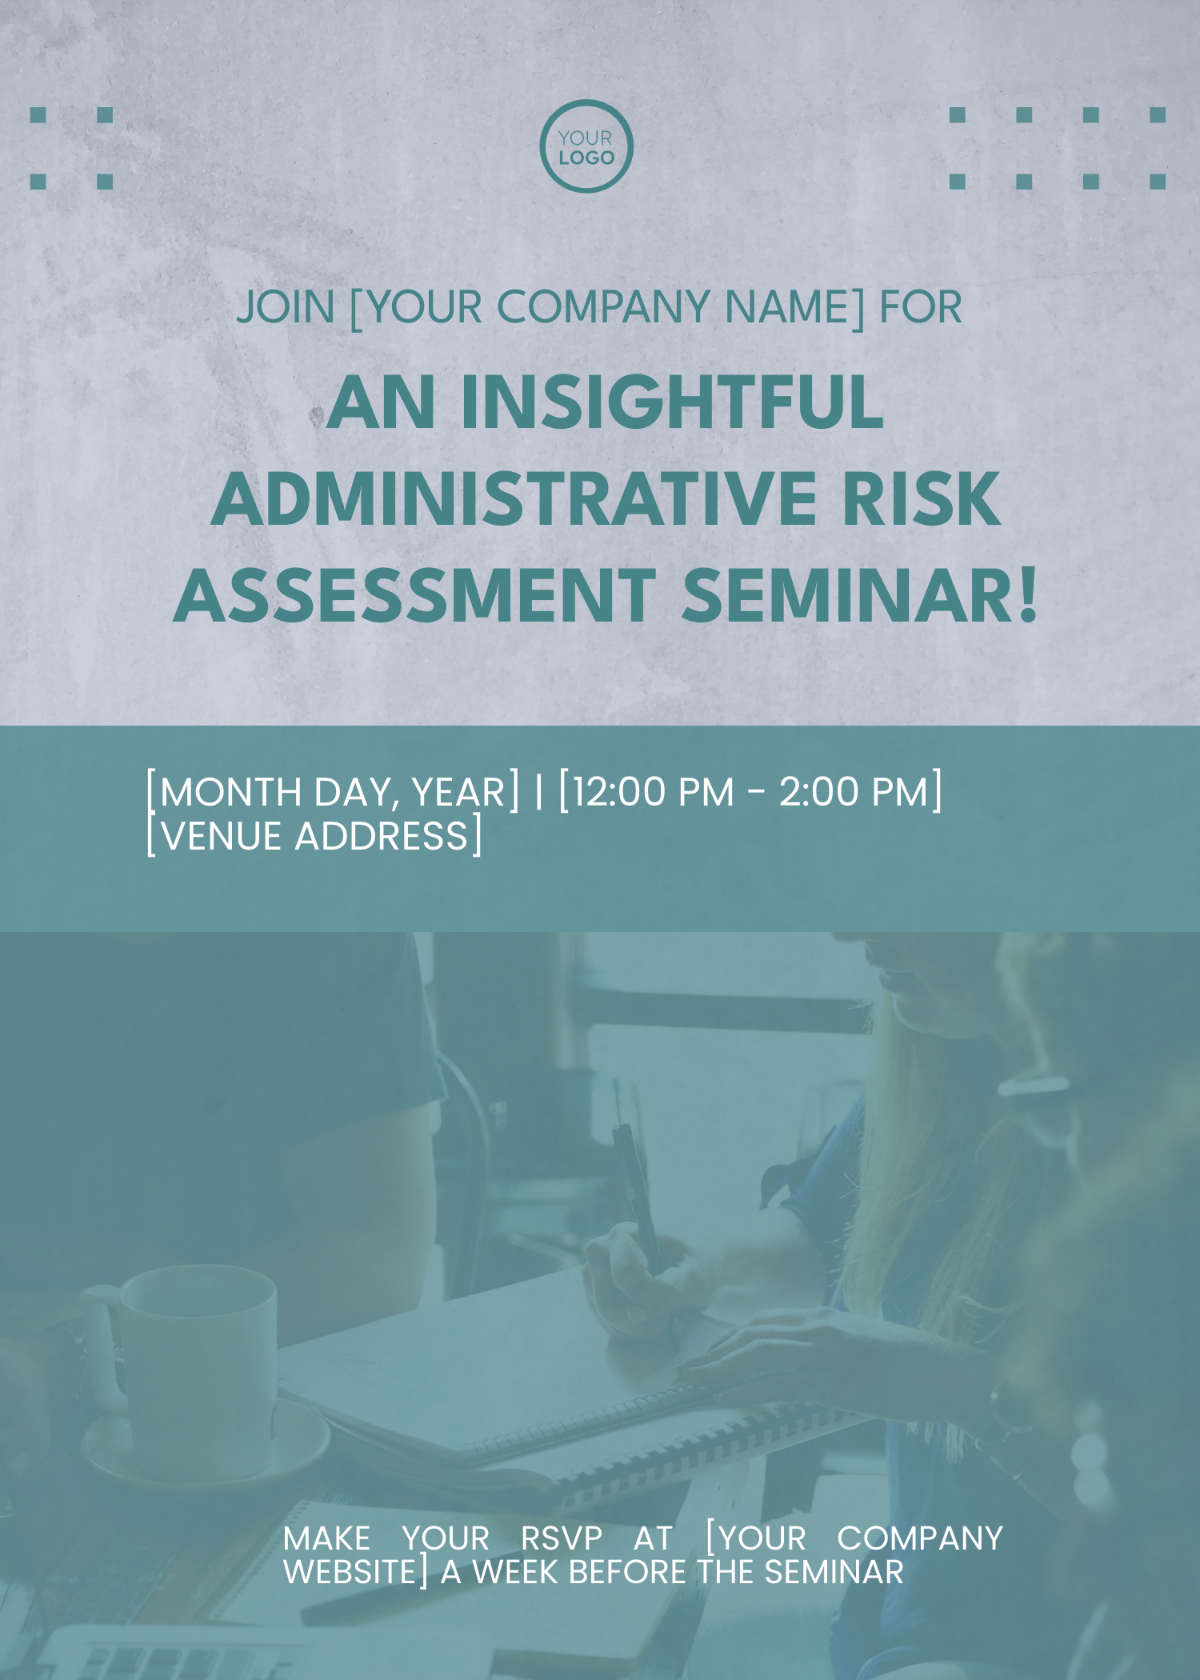 Administrative Risk Assessment Seminar Invitation Card Template